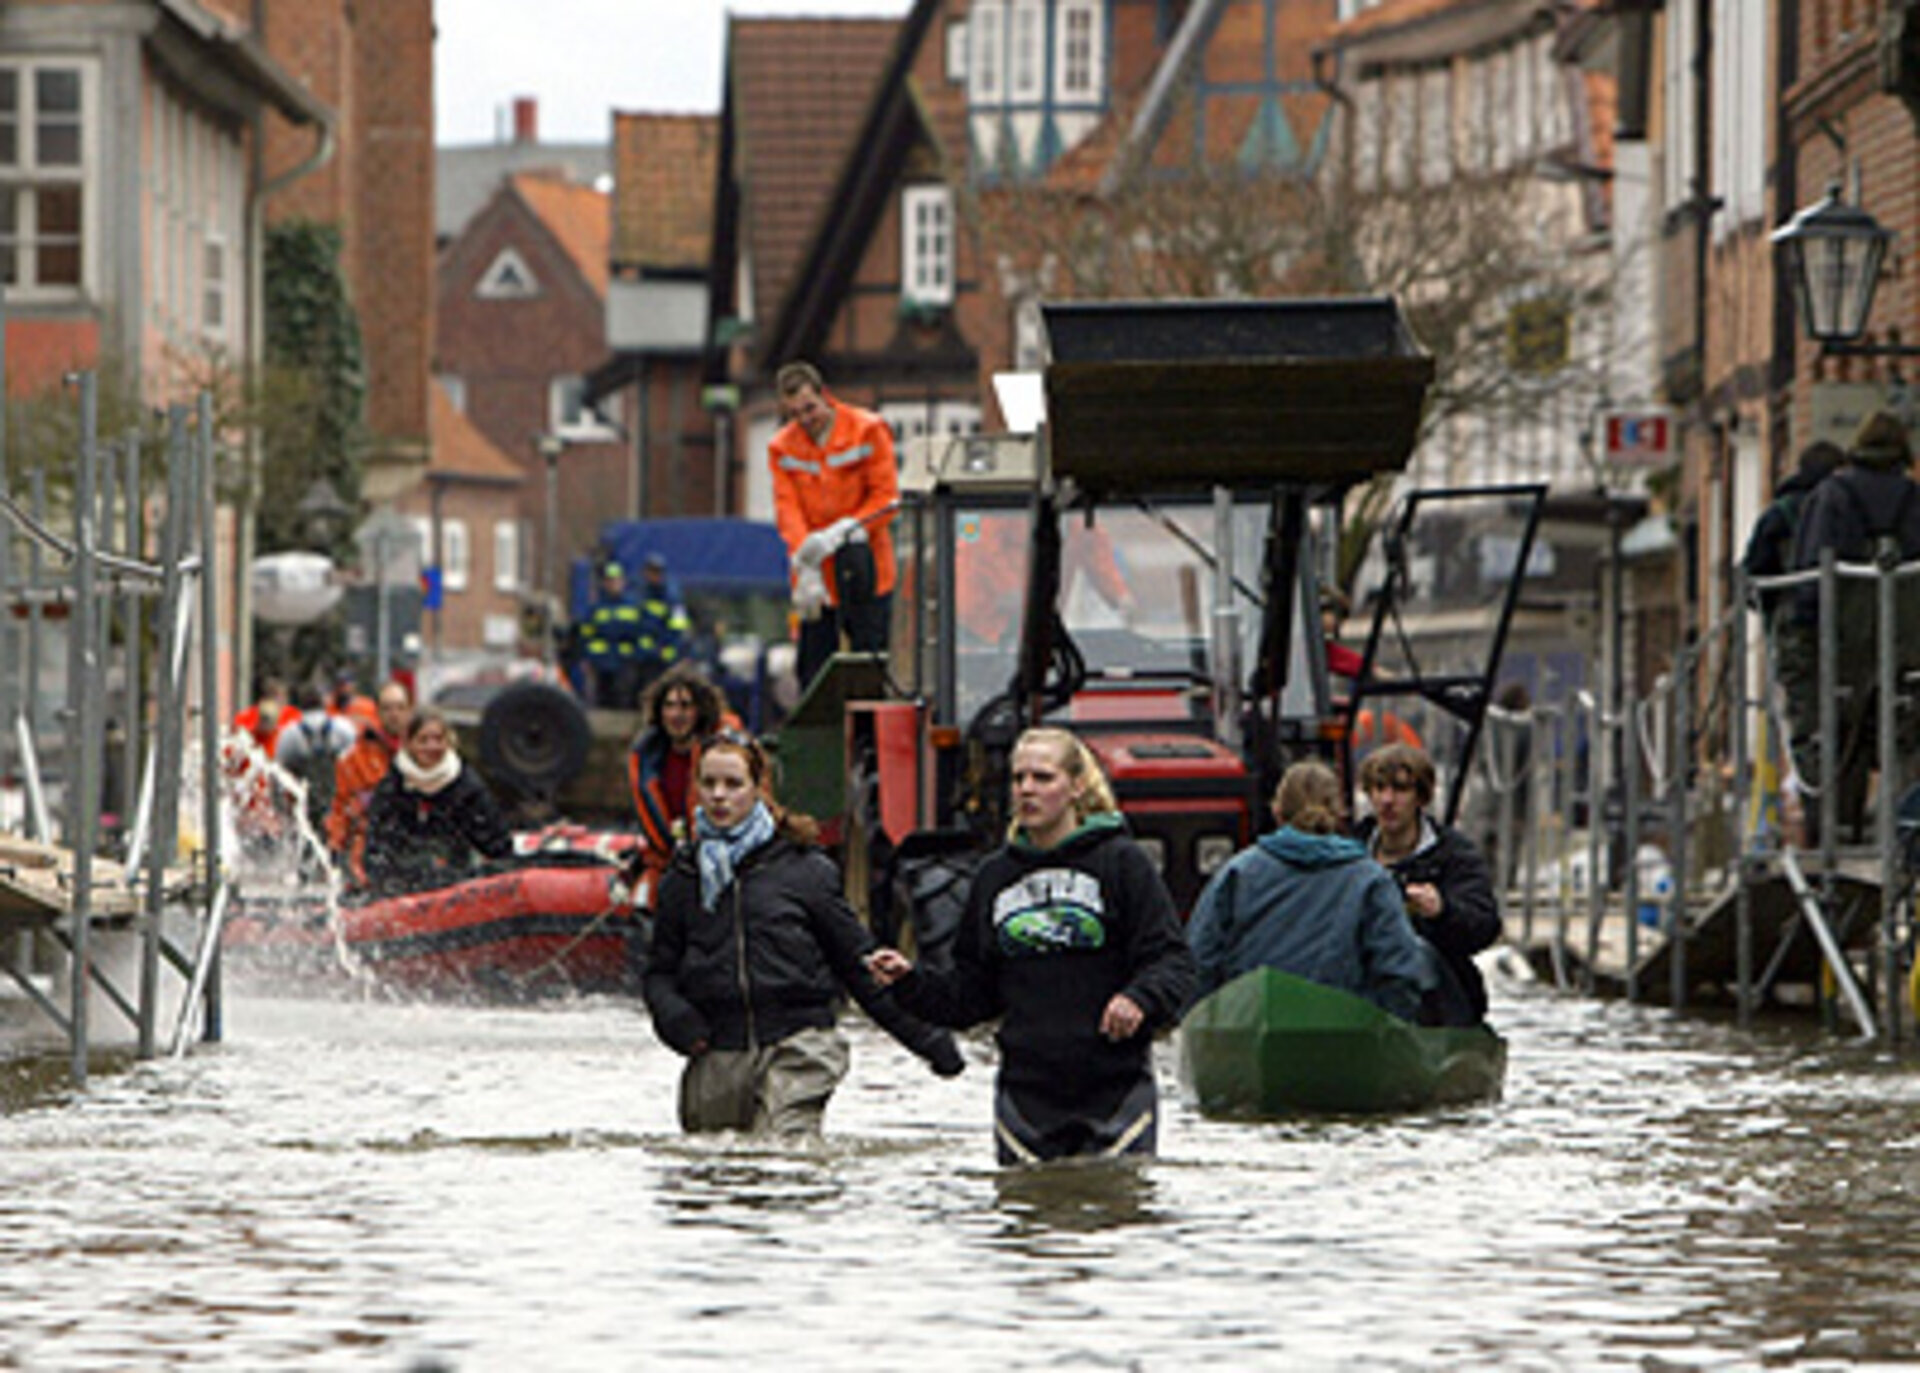 Residents make their way through a flooded street of Hitzacker